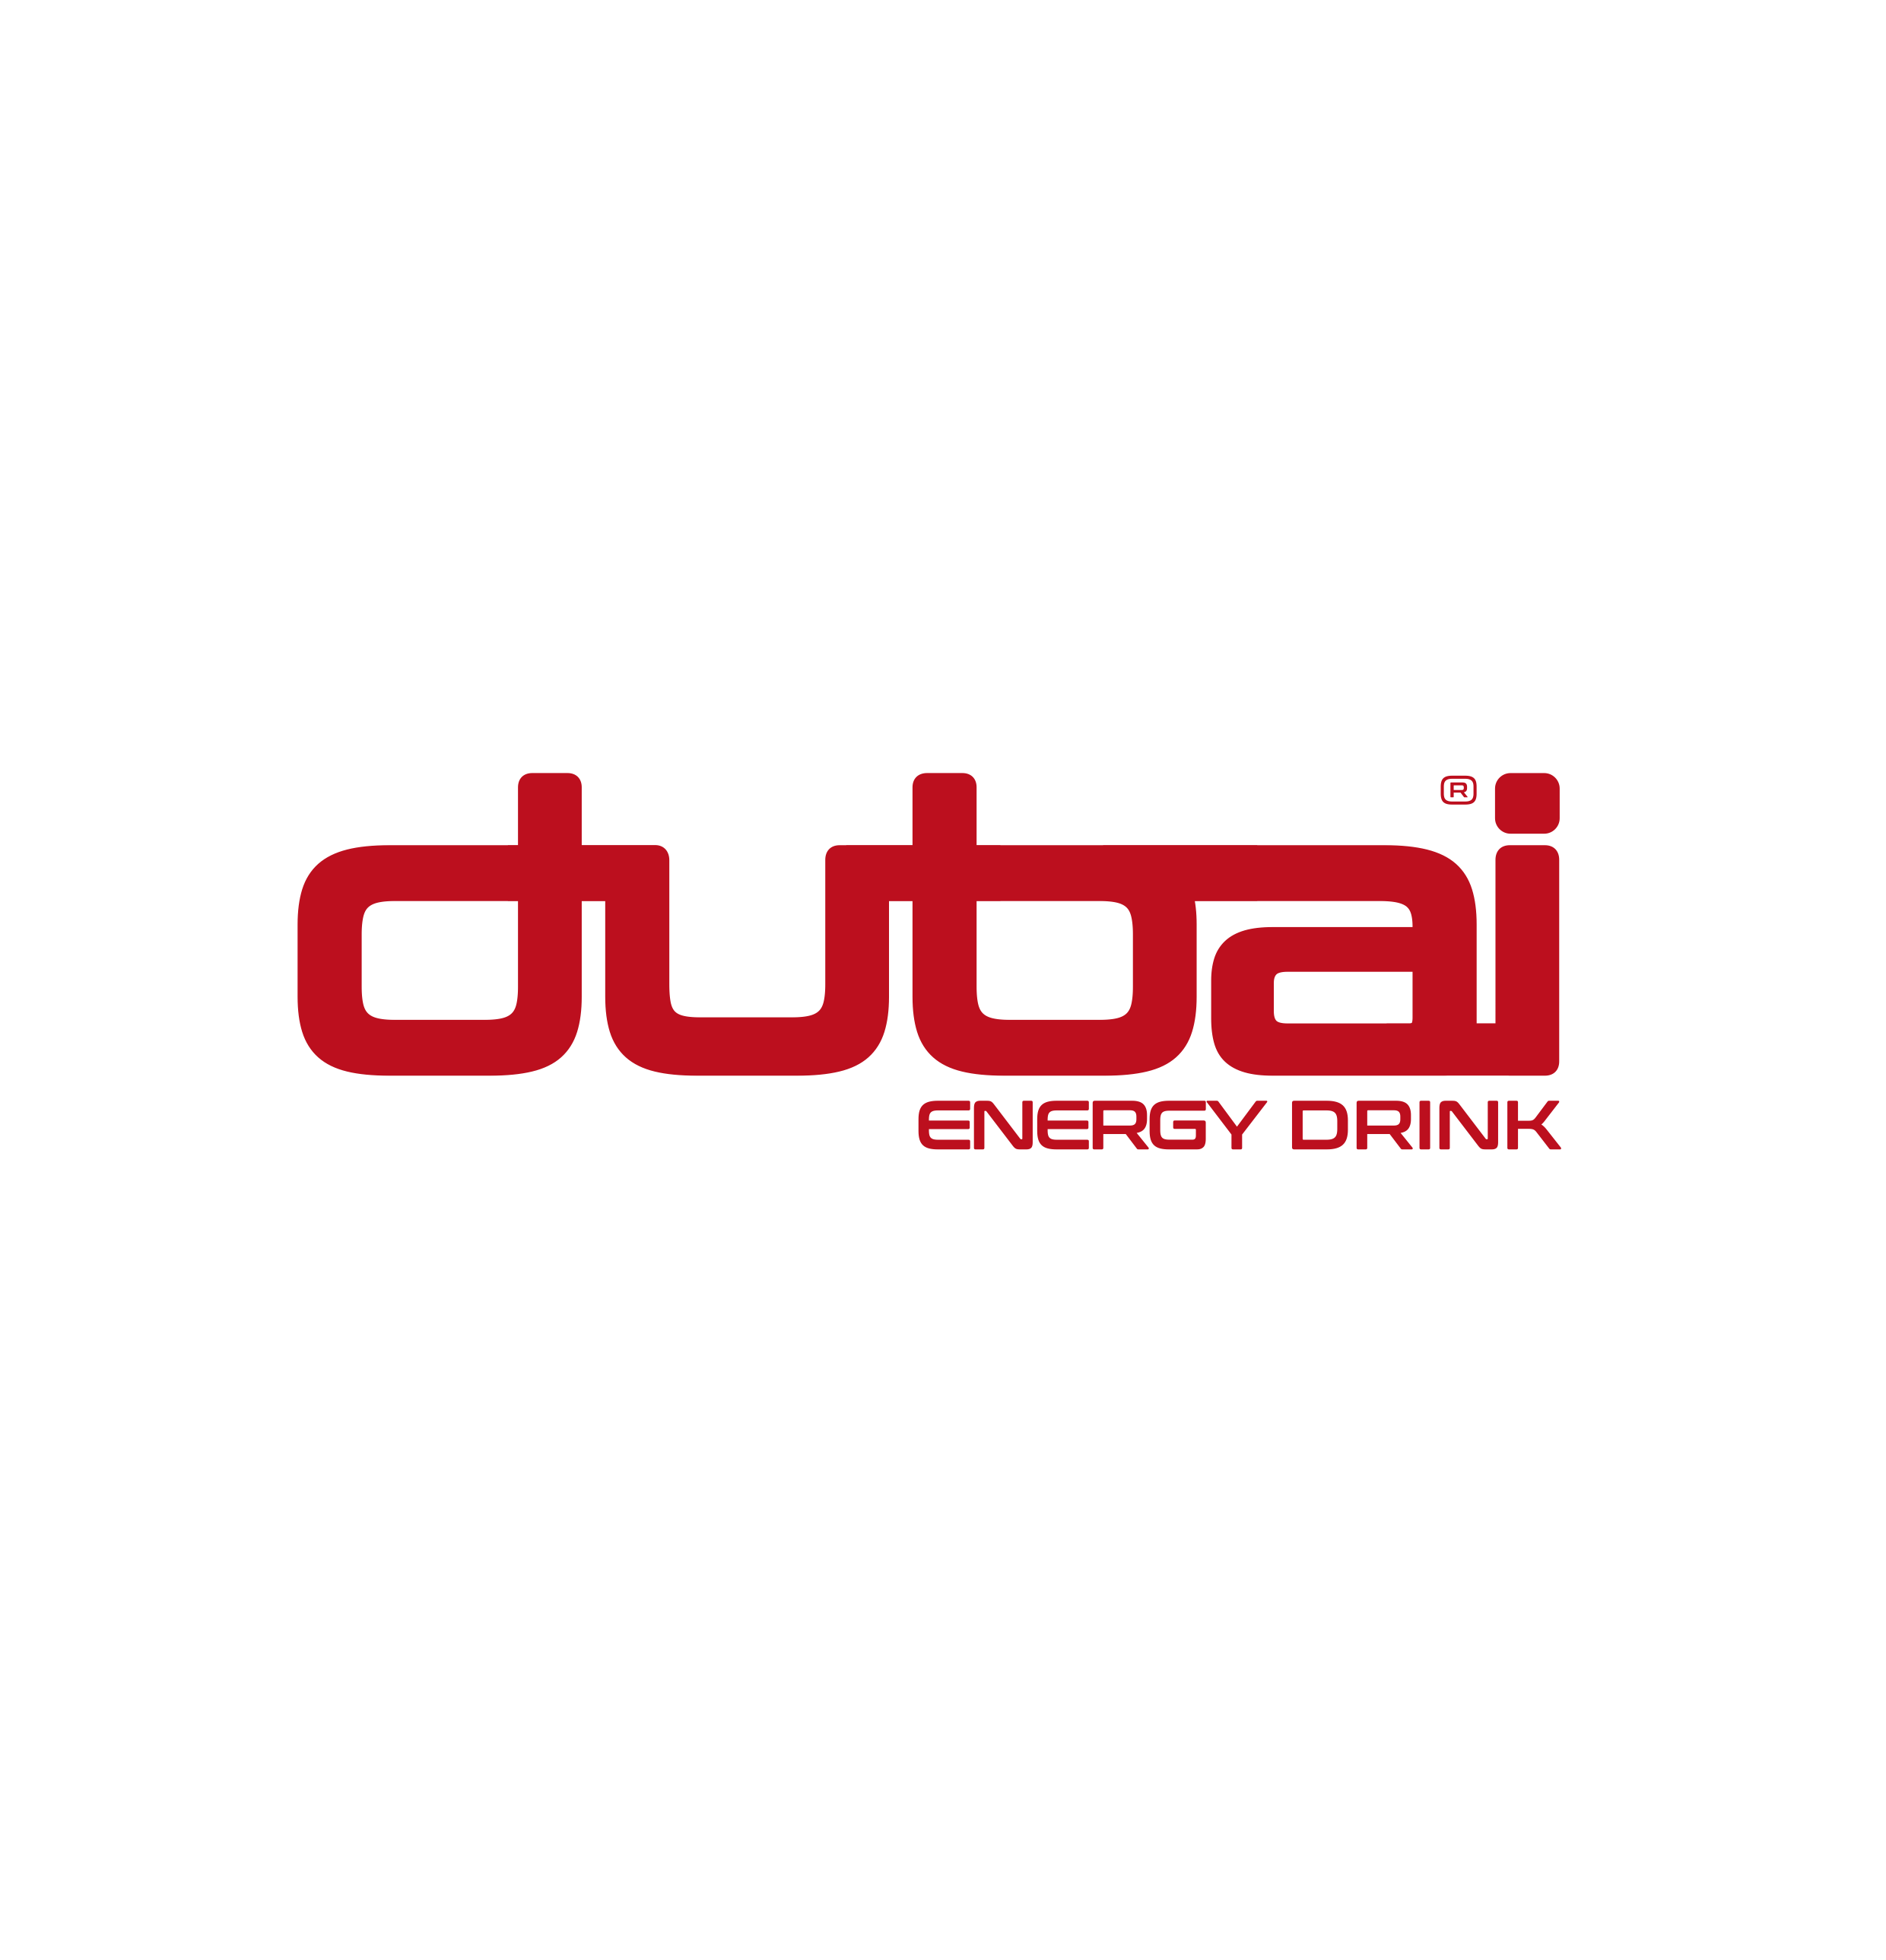 Dubai Energy Drink logo